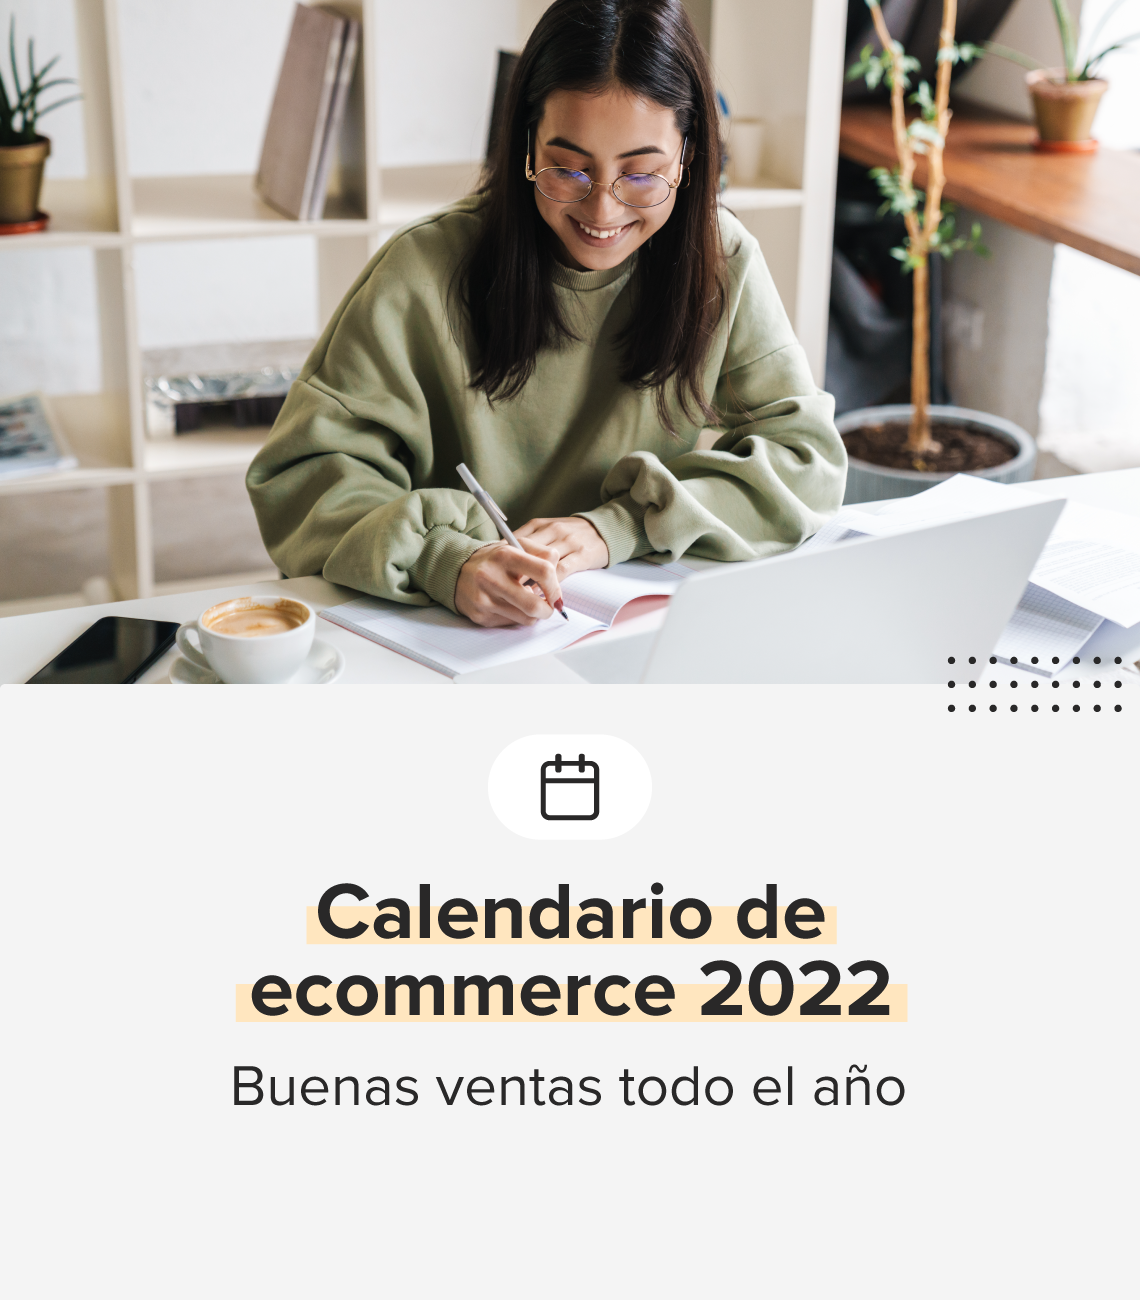 Calendario de ecommerce 2022